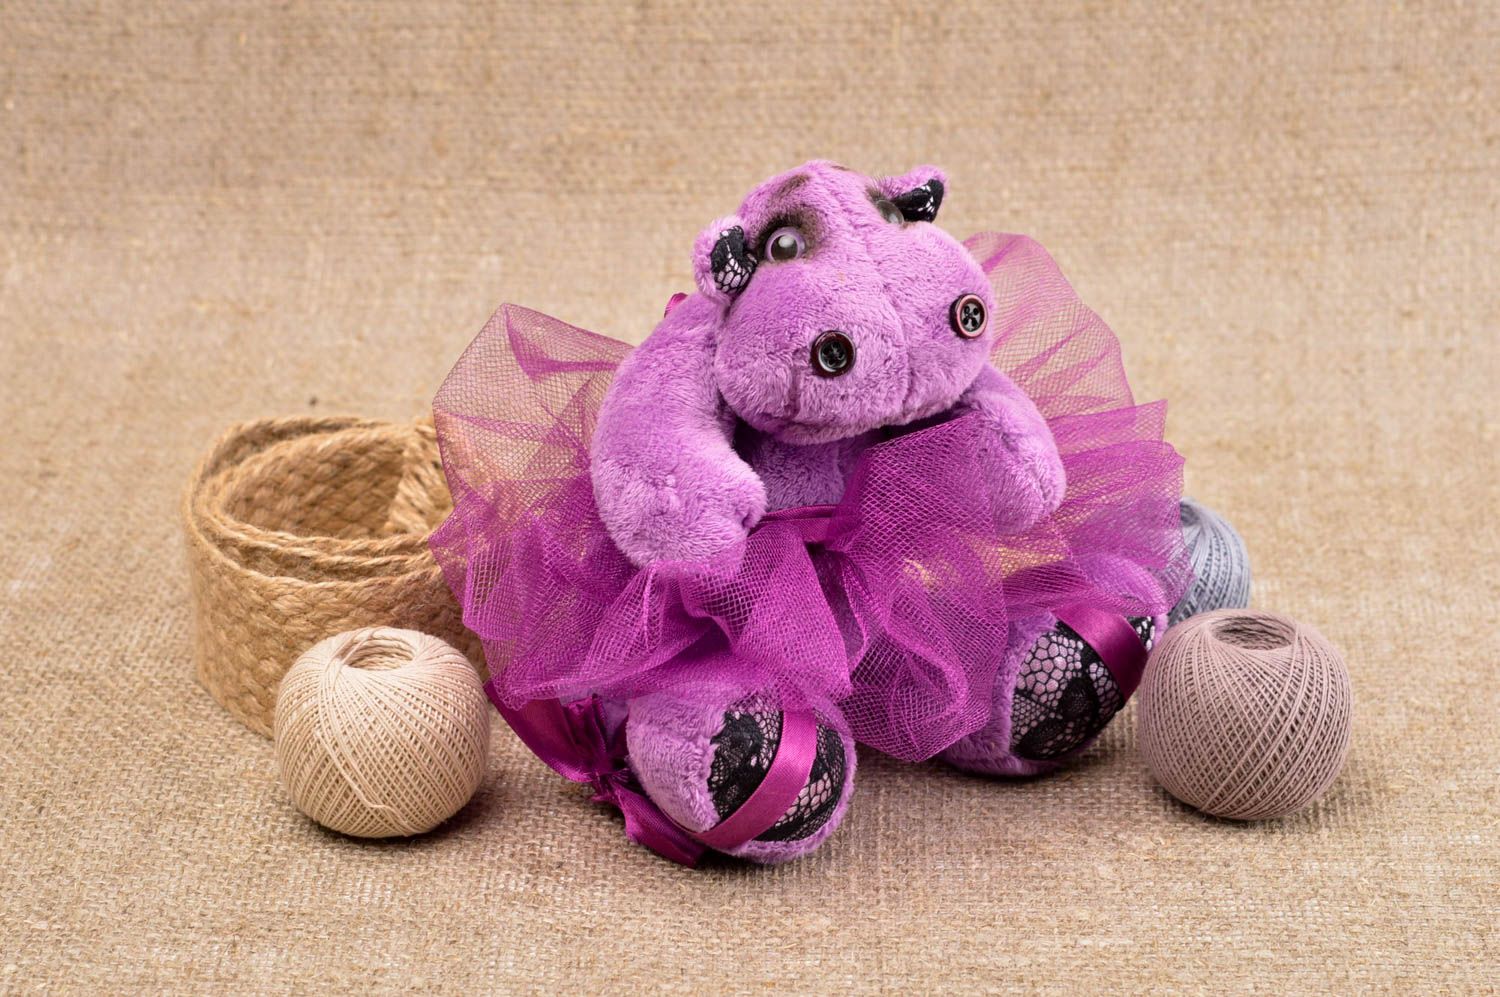 Beautiful handmade stuffed toy plush toy soft toy for kids birthday gift ideas photo 1